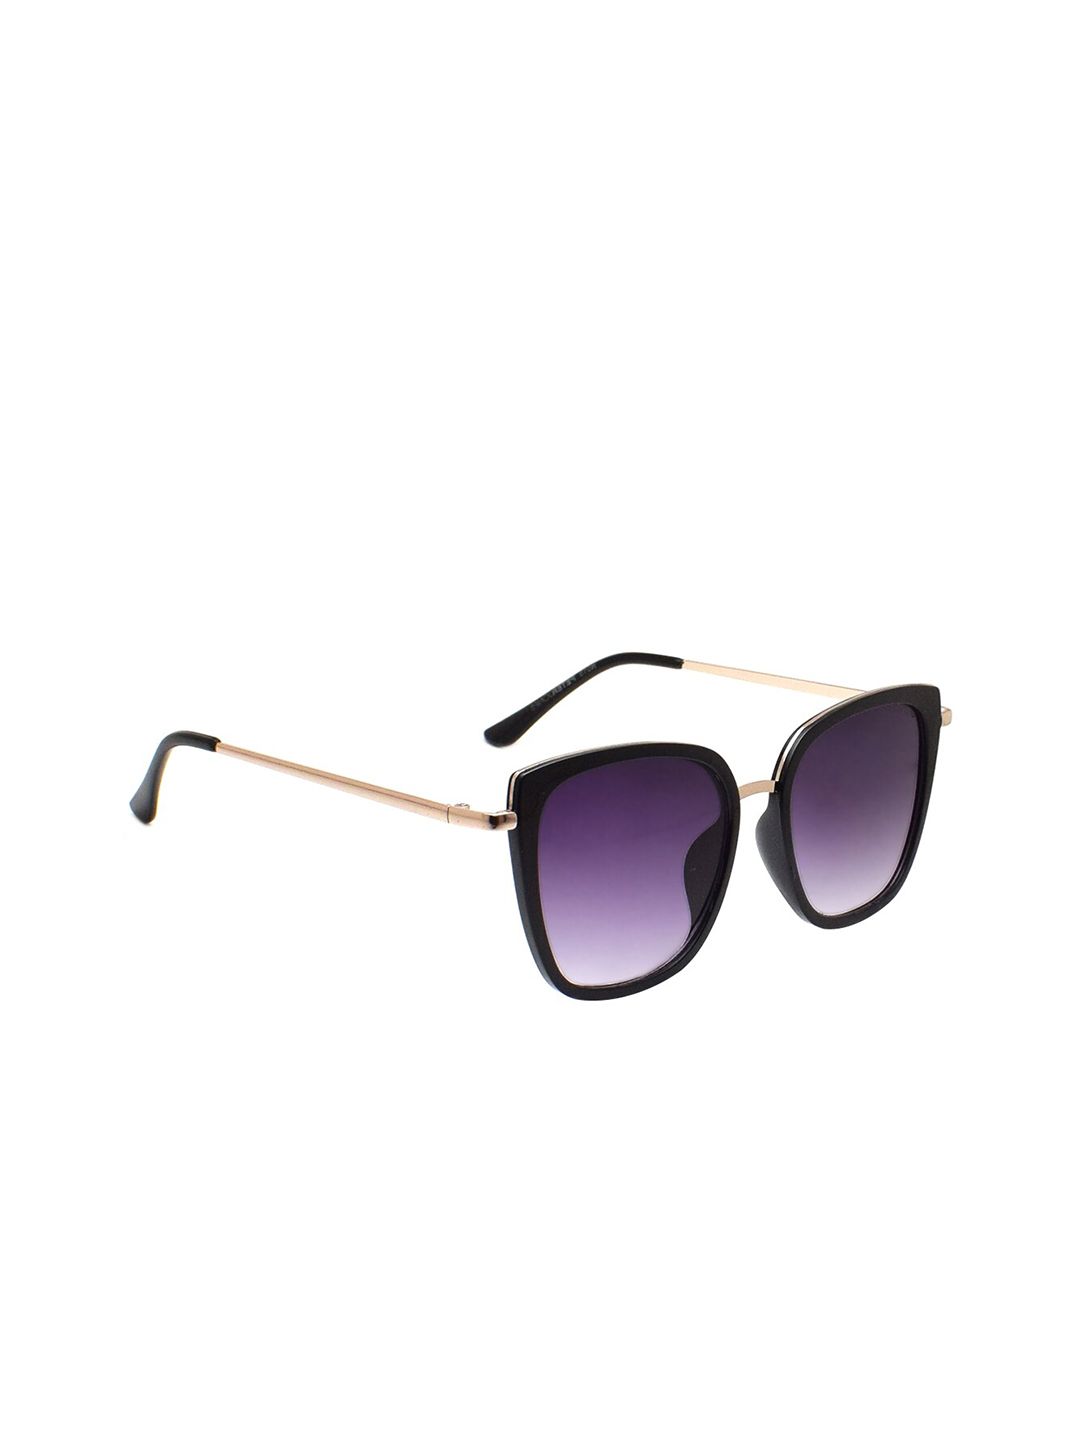 Peter Jones Eyewear Women Purple Lens & Black Butterfly Sunglasses RD018B Price in India